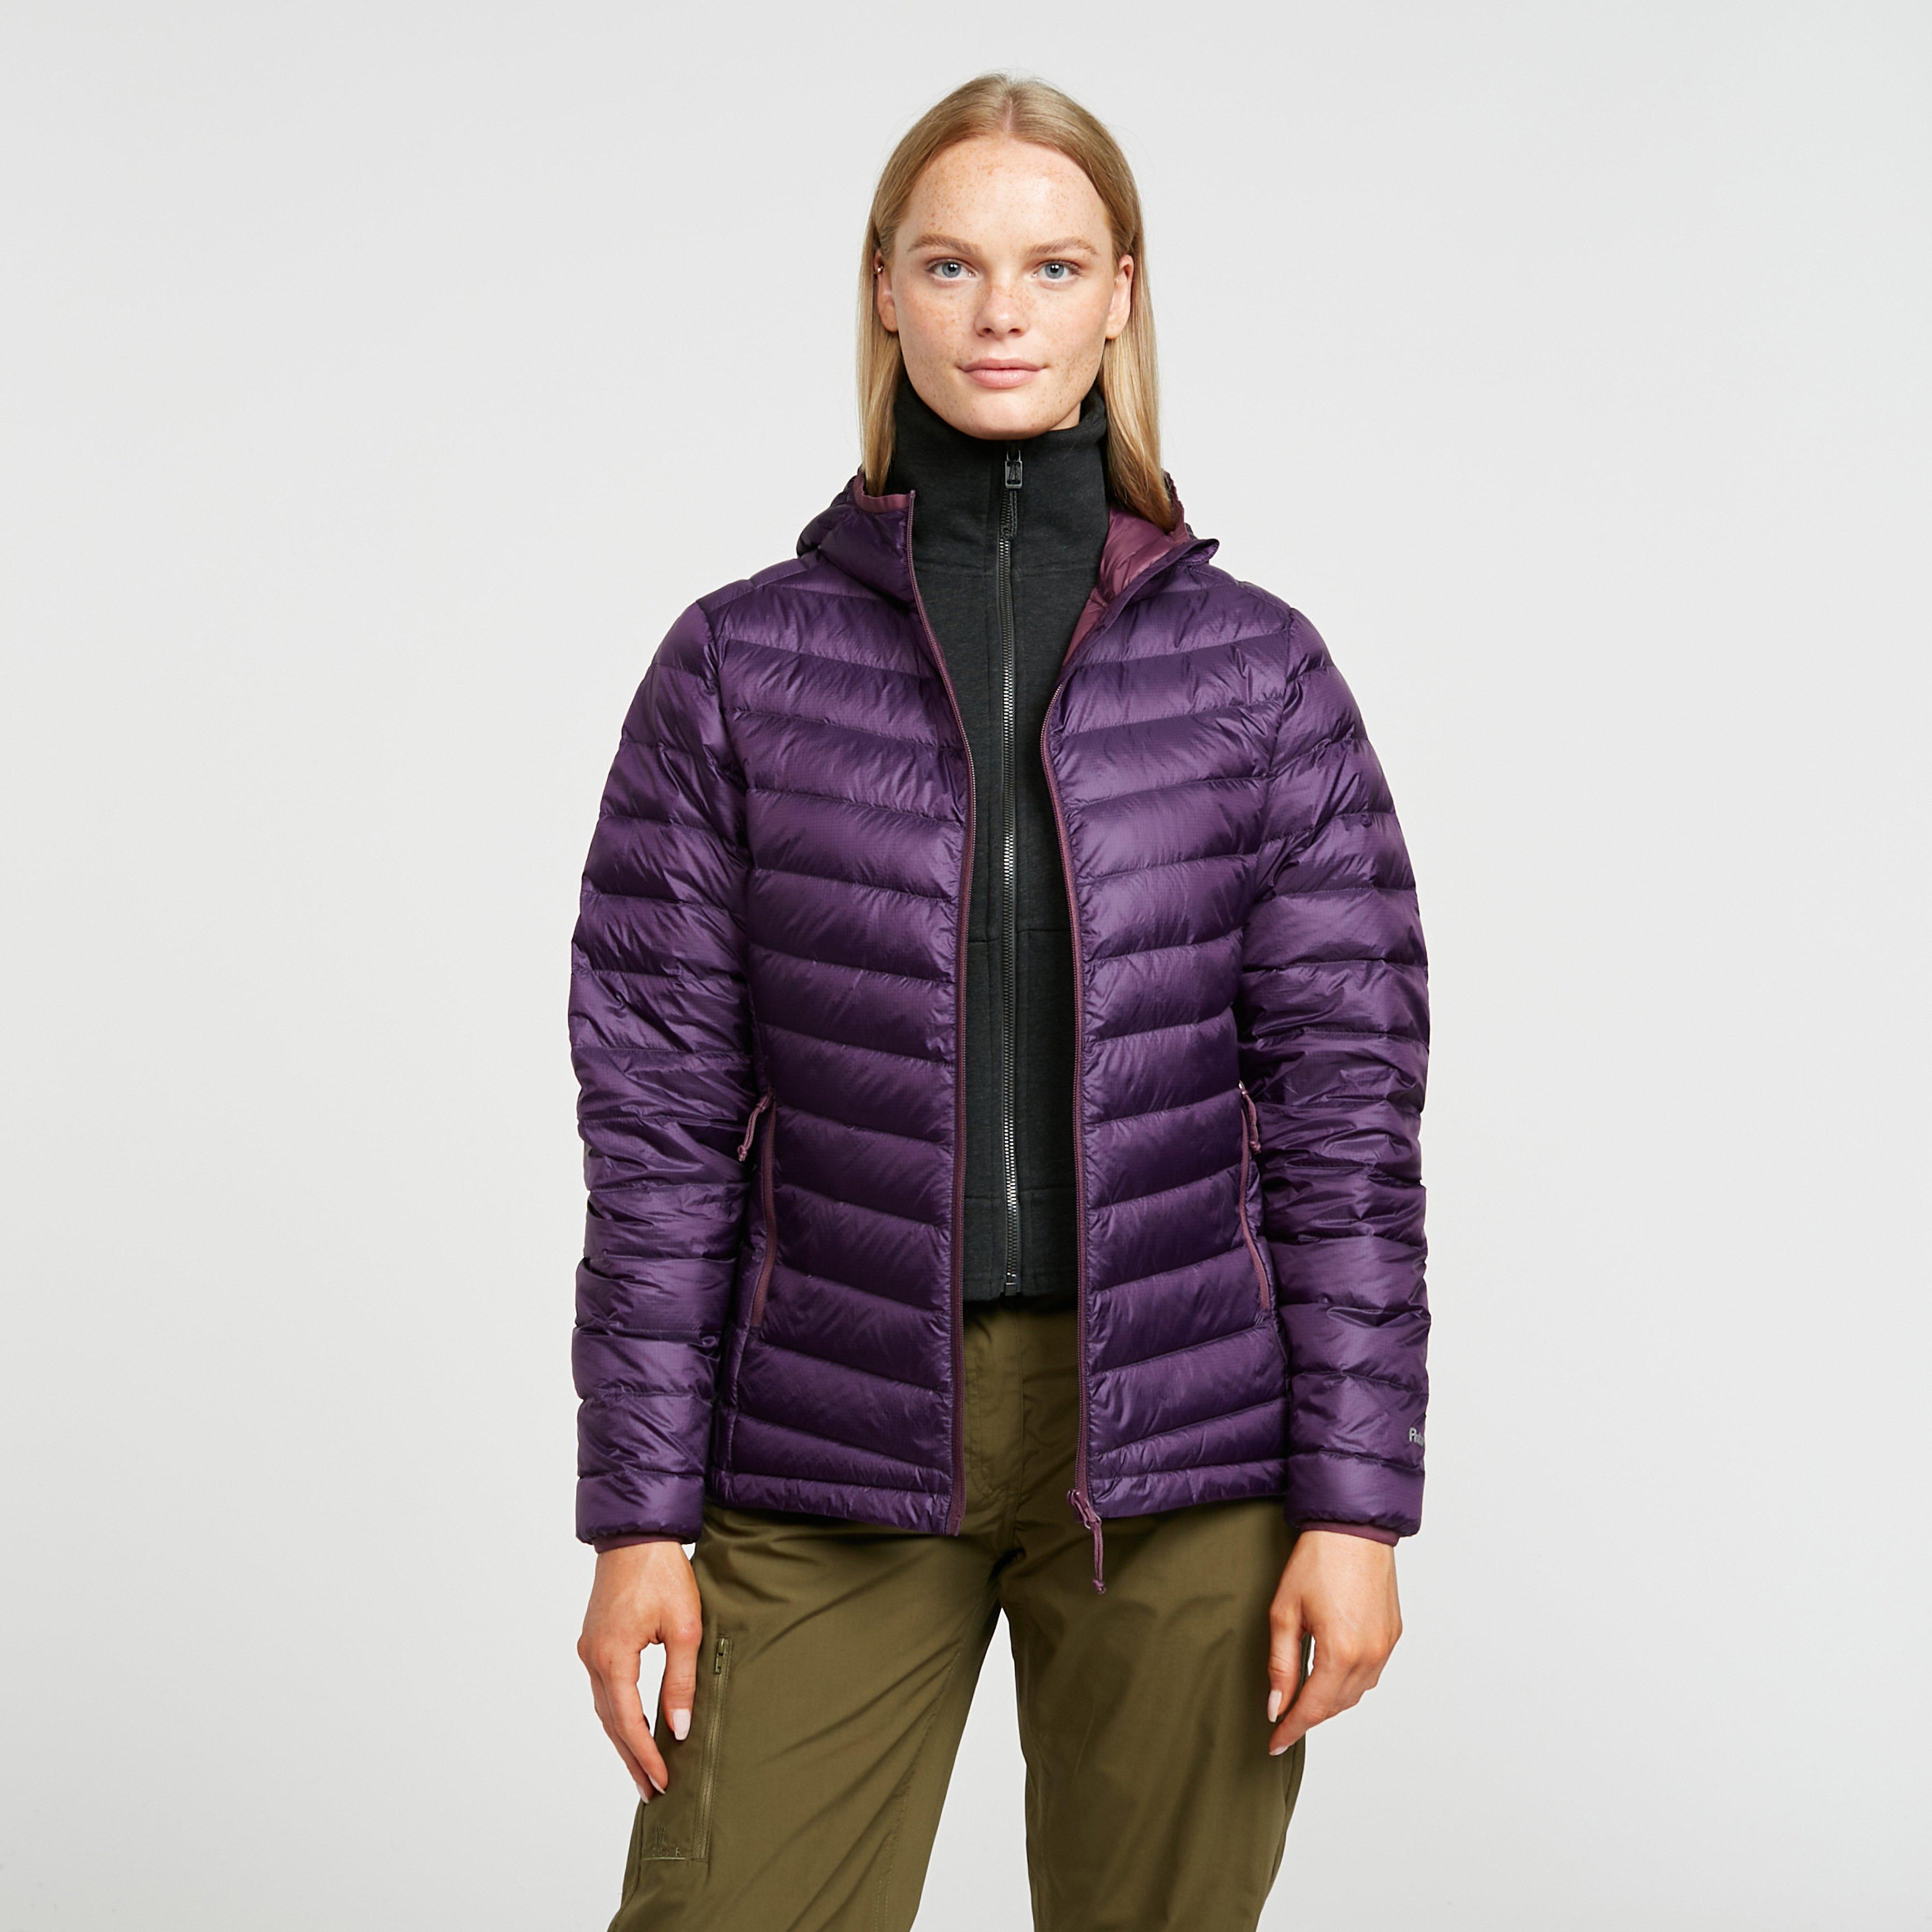 Peter Storm Womens Packlite Alpinist Jacket - Purple/purple  Purple/purple